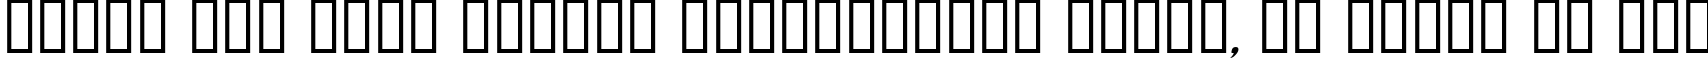 Пример написания шрифтом Dumbledor 3 Italic текста на русском